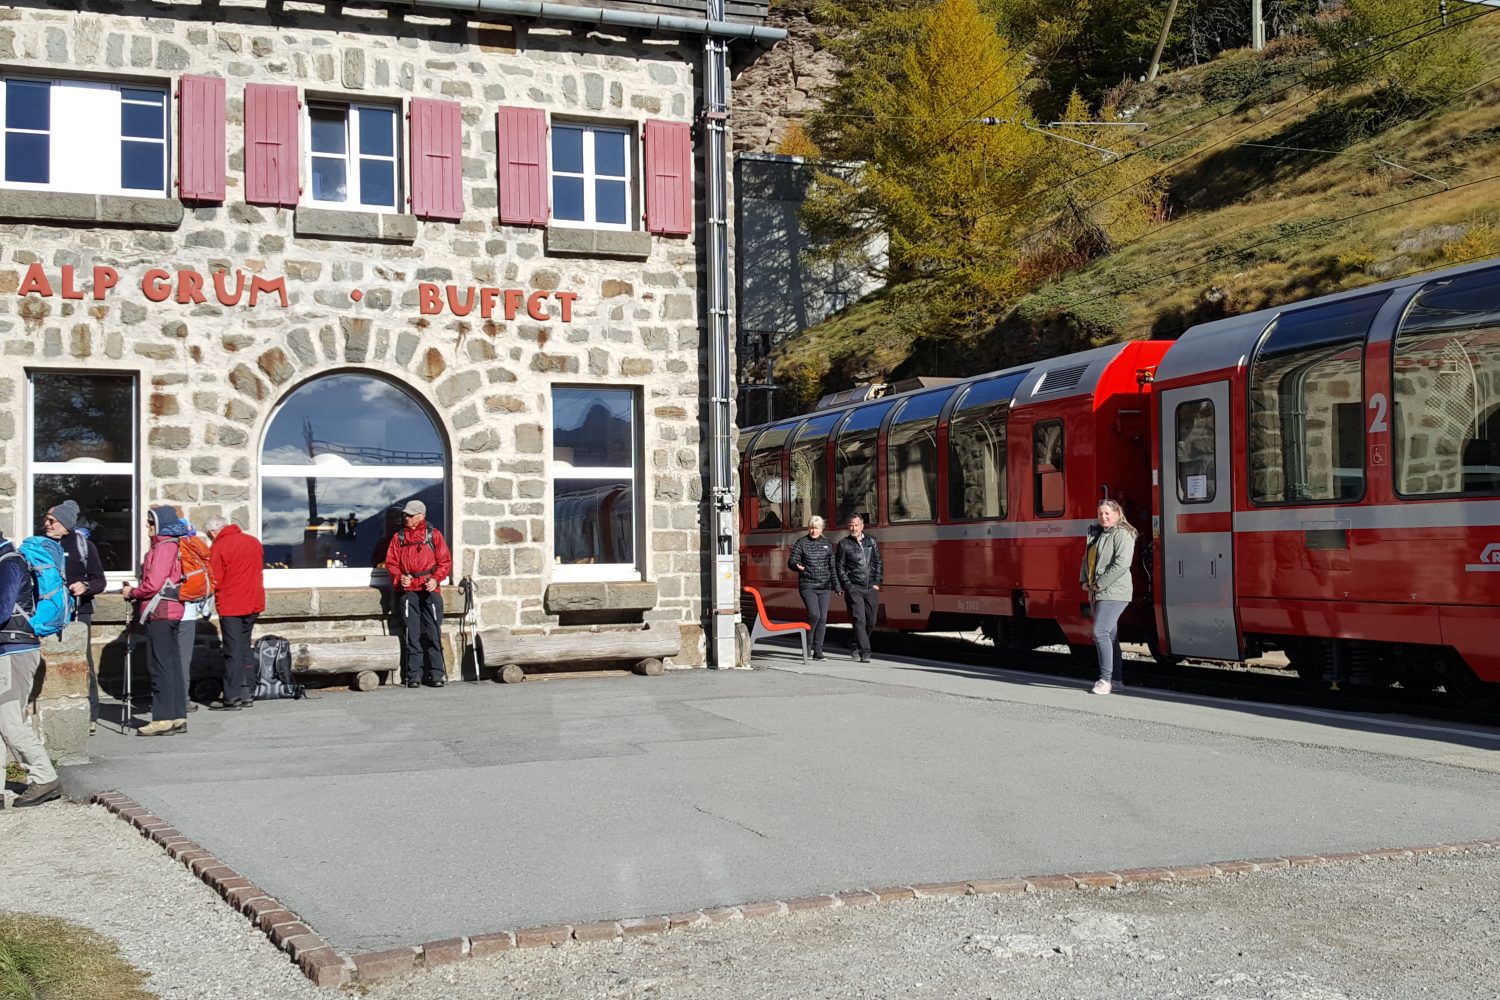 Station Alp Grüm hier maakt de Bernina Express tijdens de treinreis een korte stop.